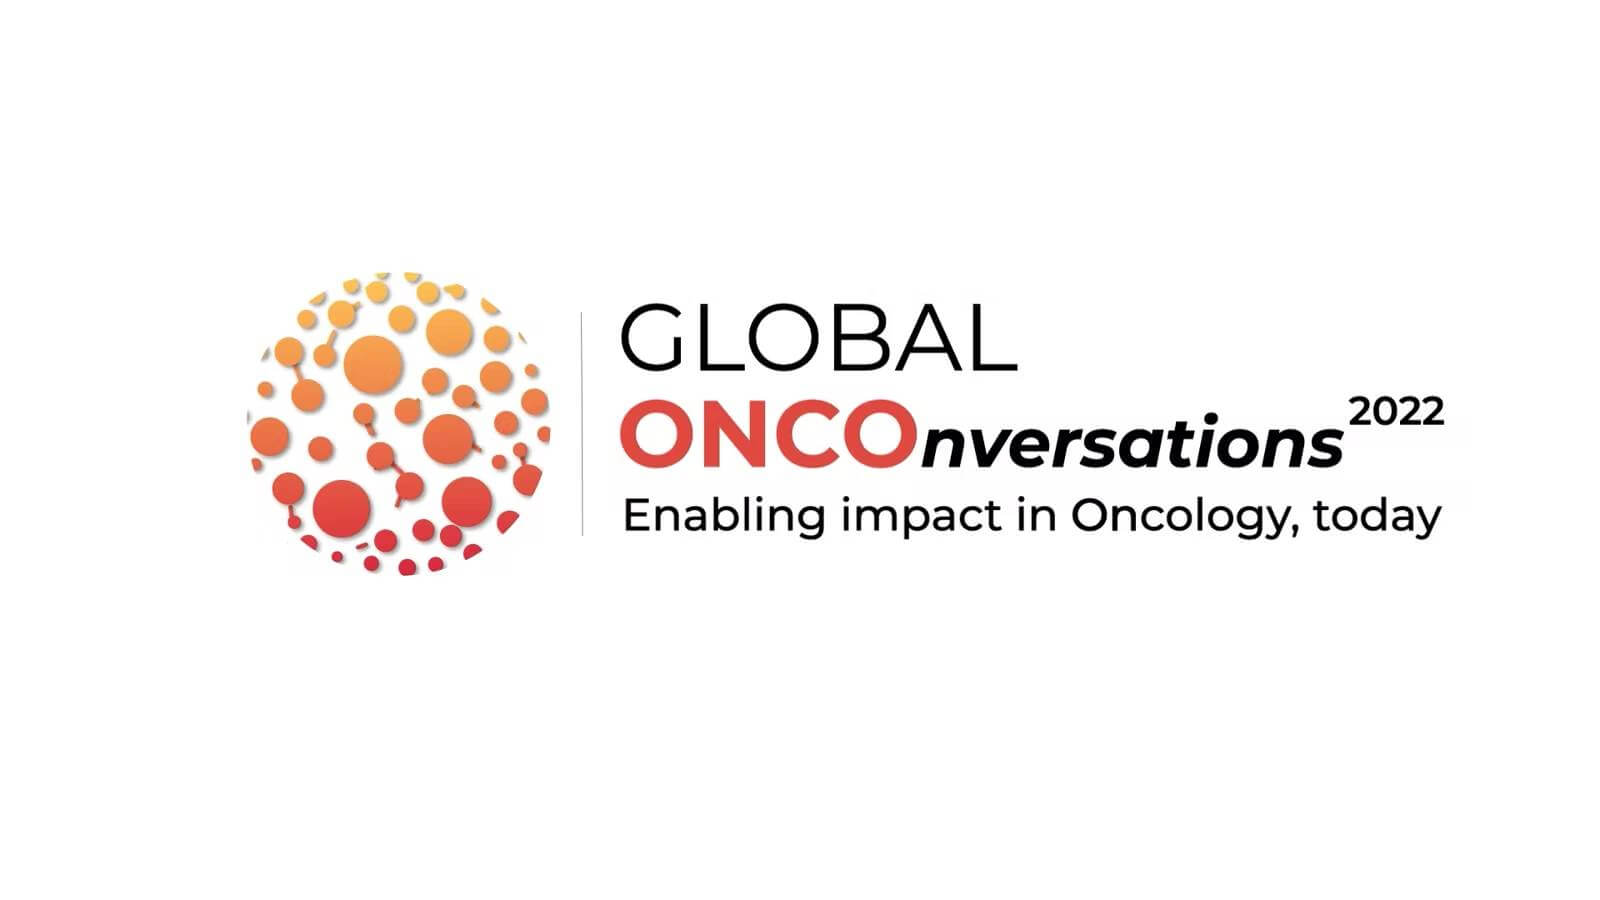 Global ONCOnversations